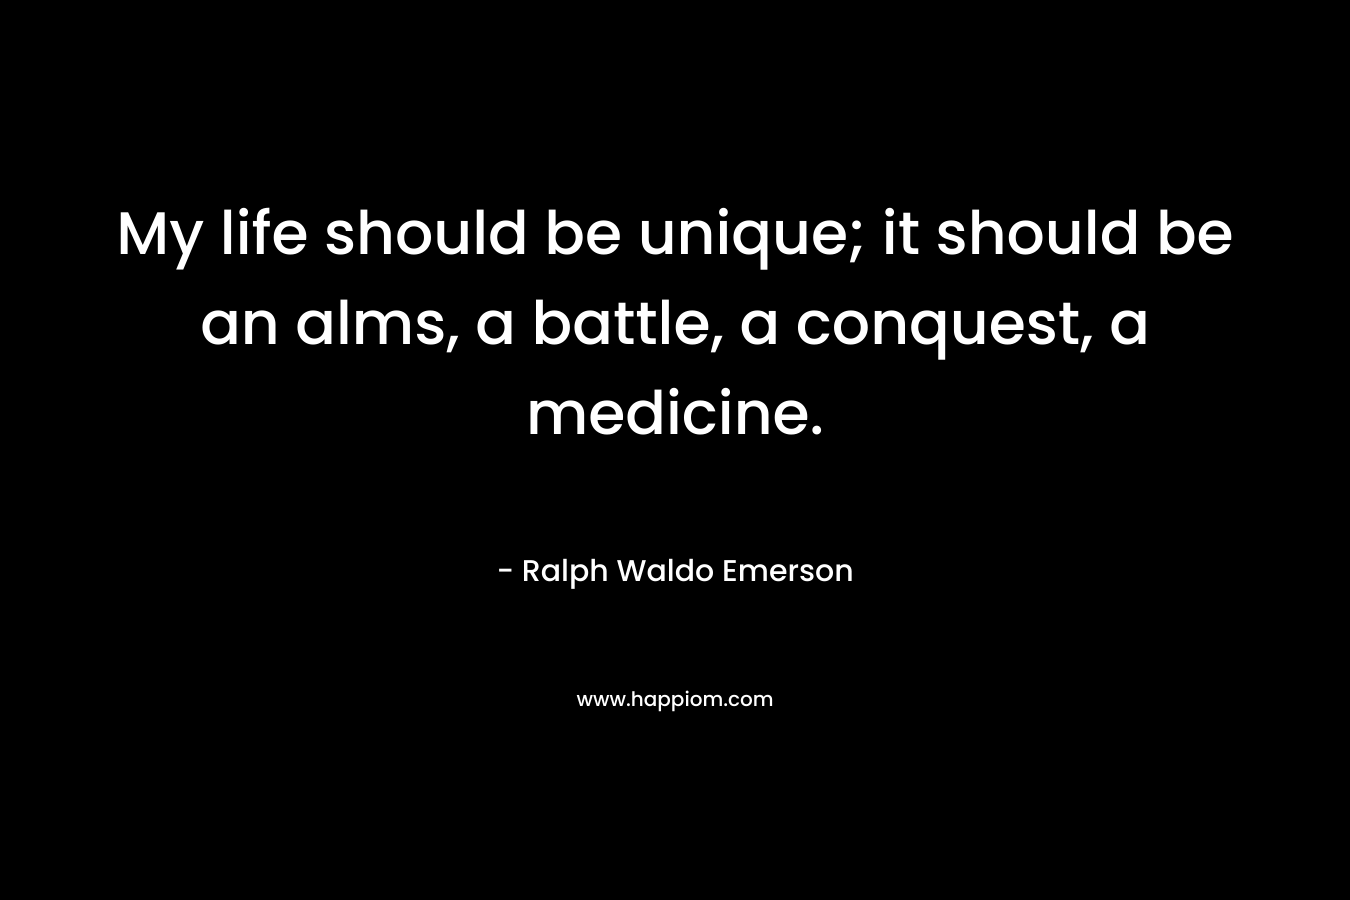 My life should be unique; it should be an alms, a battle, a conquest, a medicine.